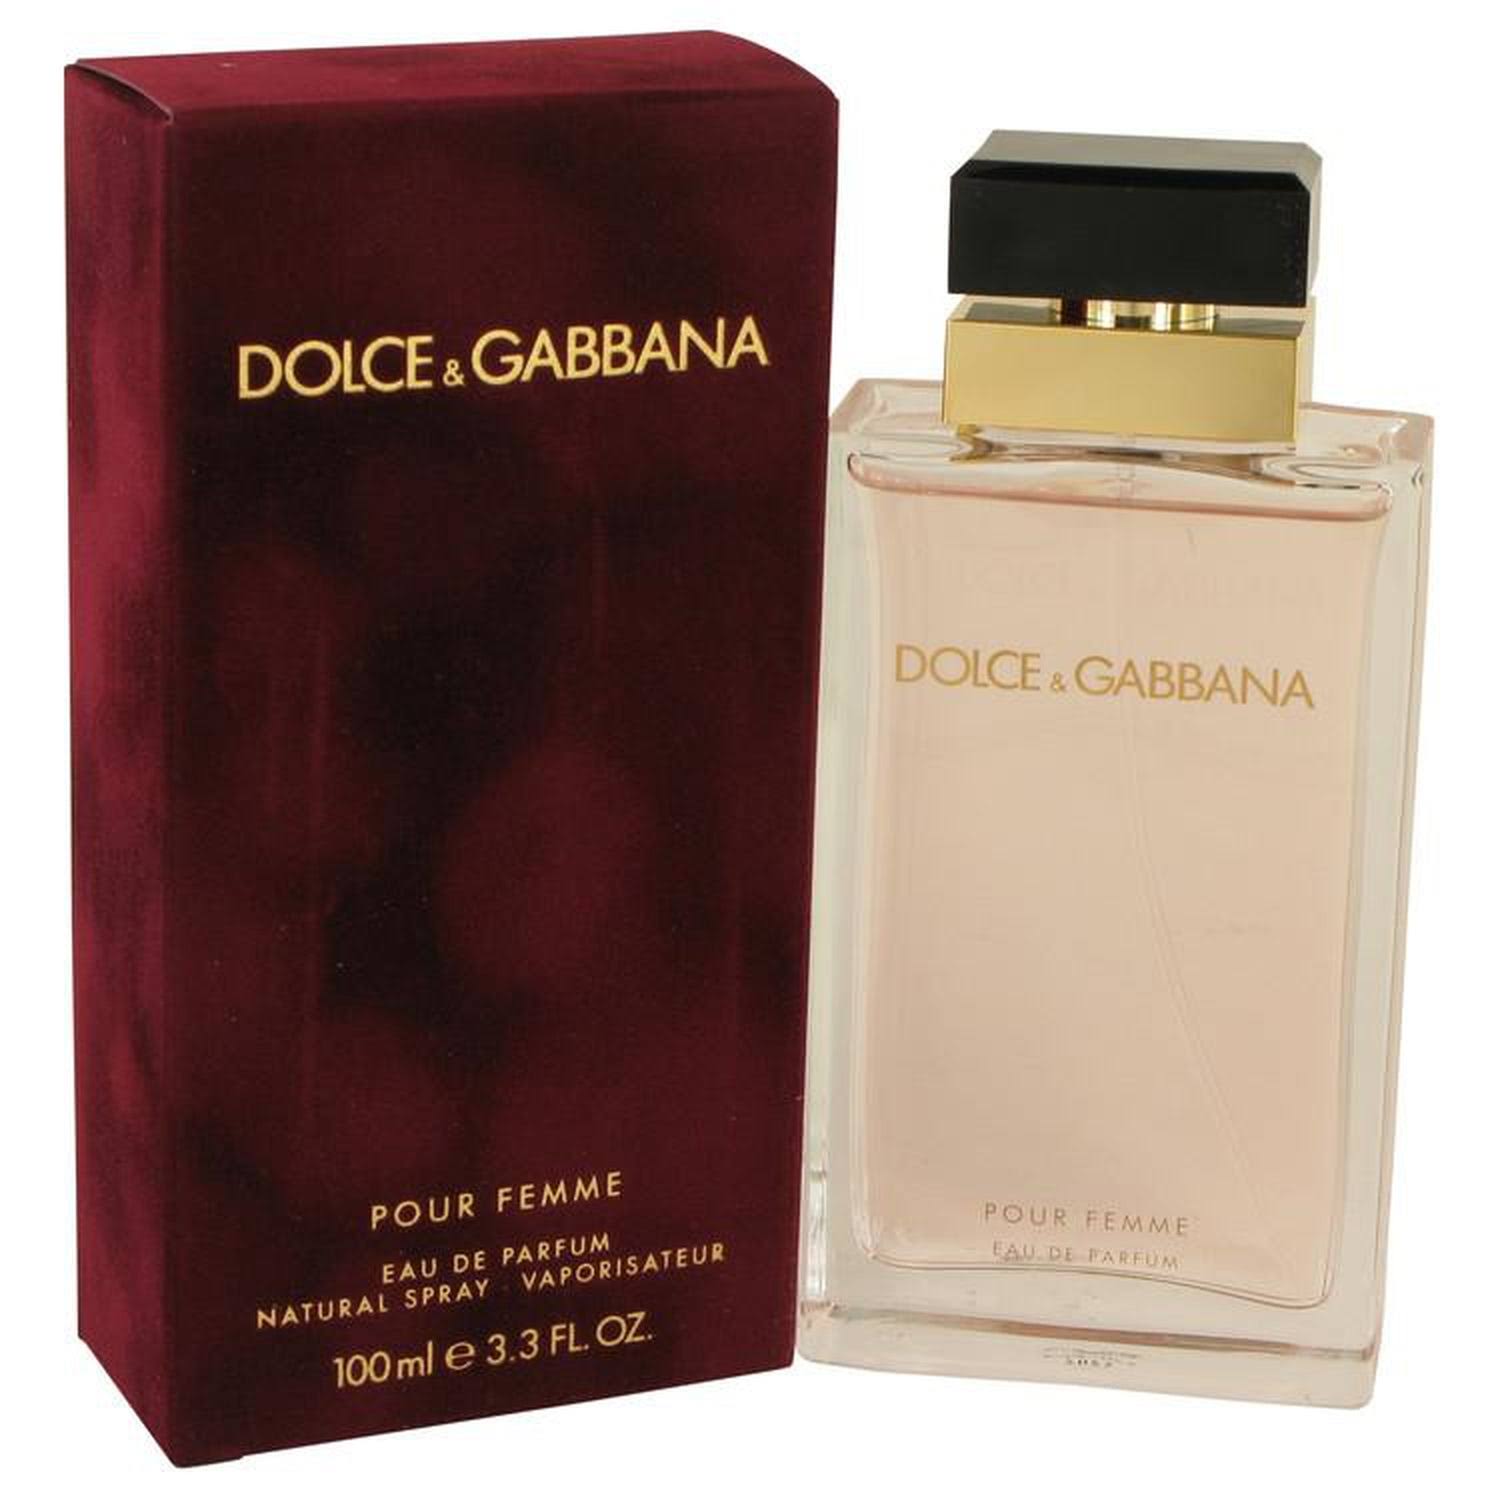 Dolce & Gabbana Pour Femme Eau De Perfume Spray - 100ml